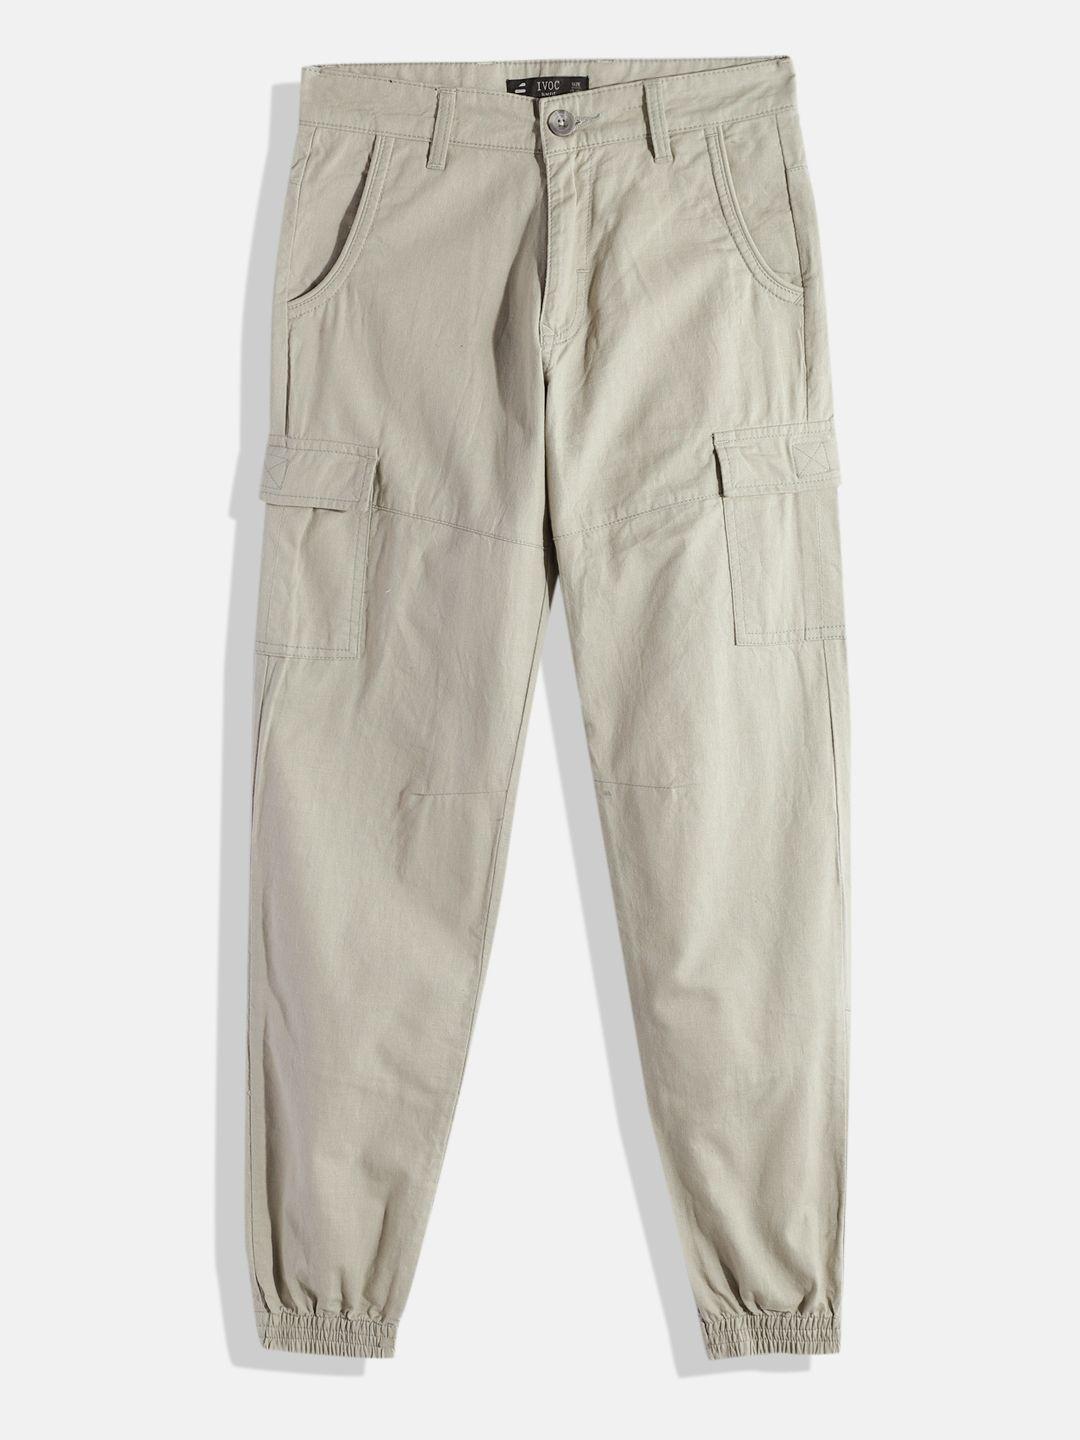 ivoc boys slim fit cotton cargos trousers